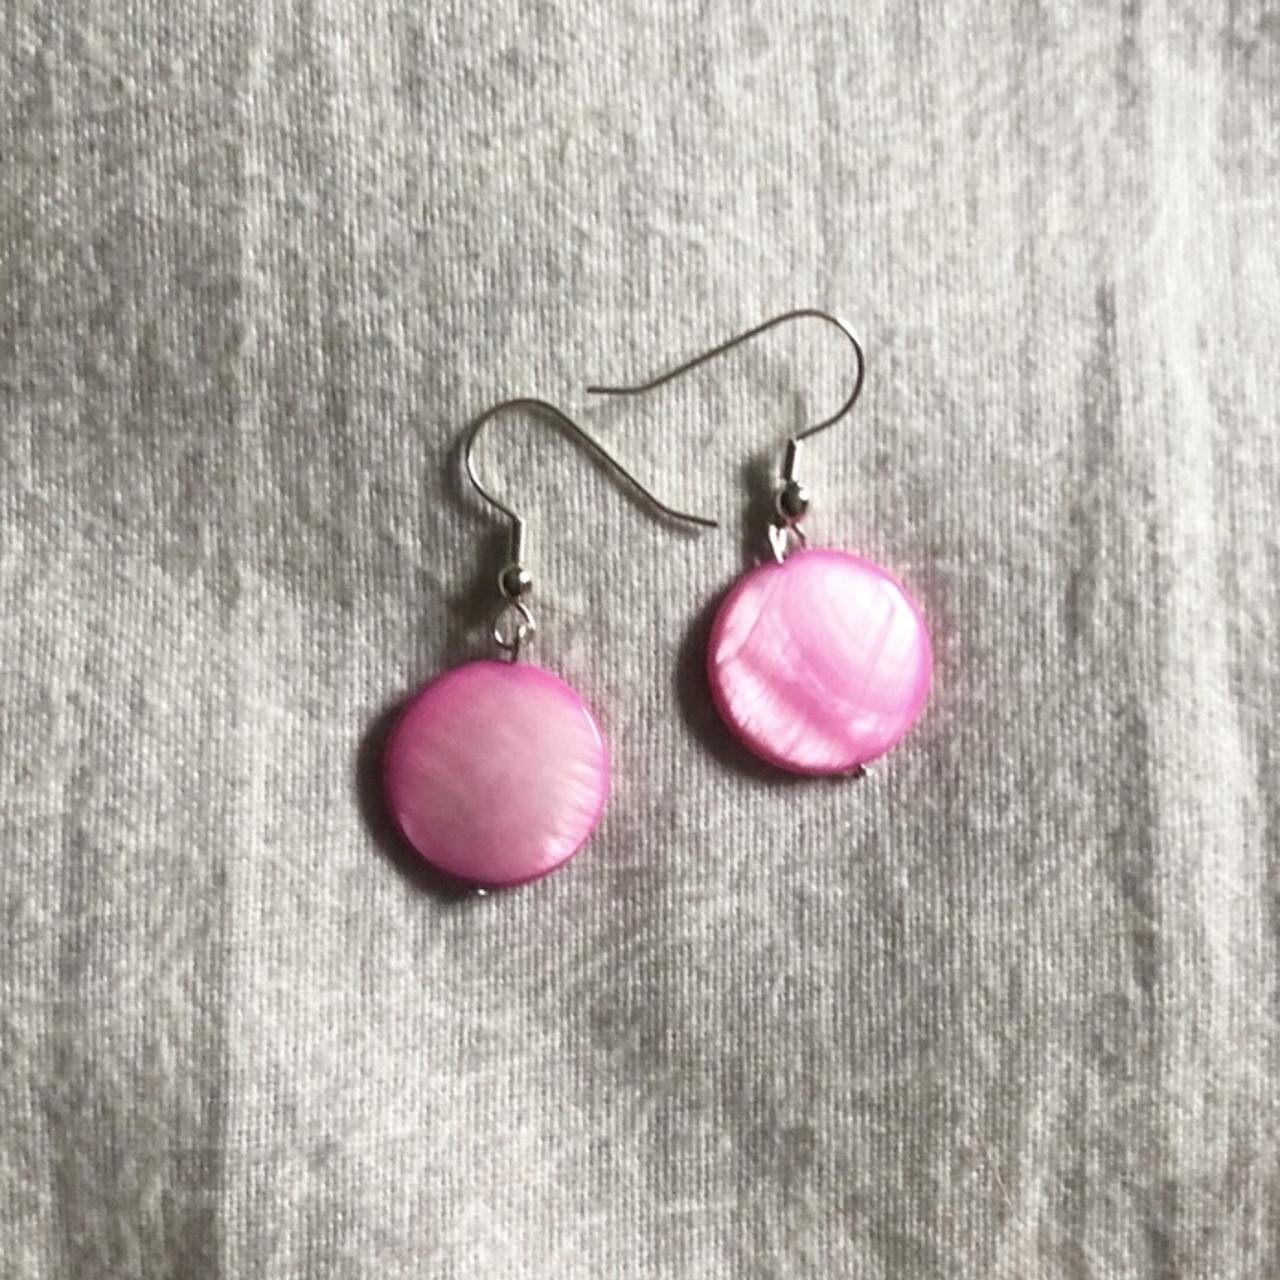 Product Image 1 - Pink Circle Dangle Earrings 🌸🌺🌷
:Free